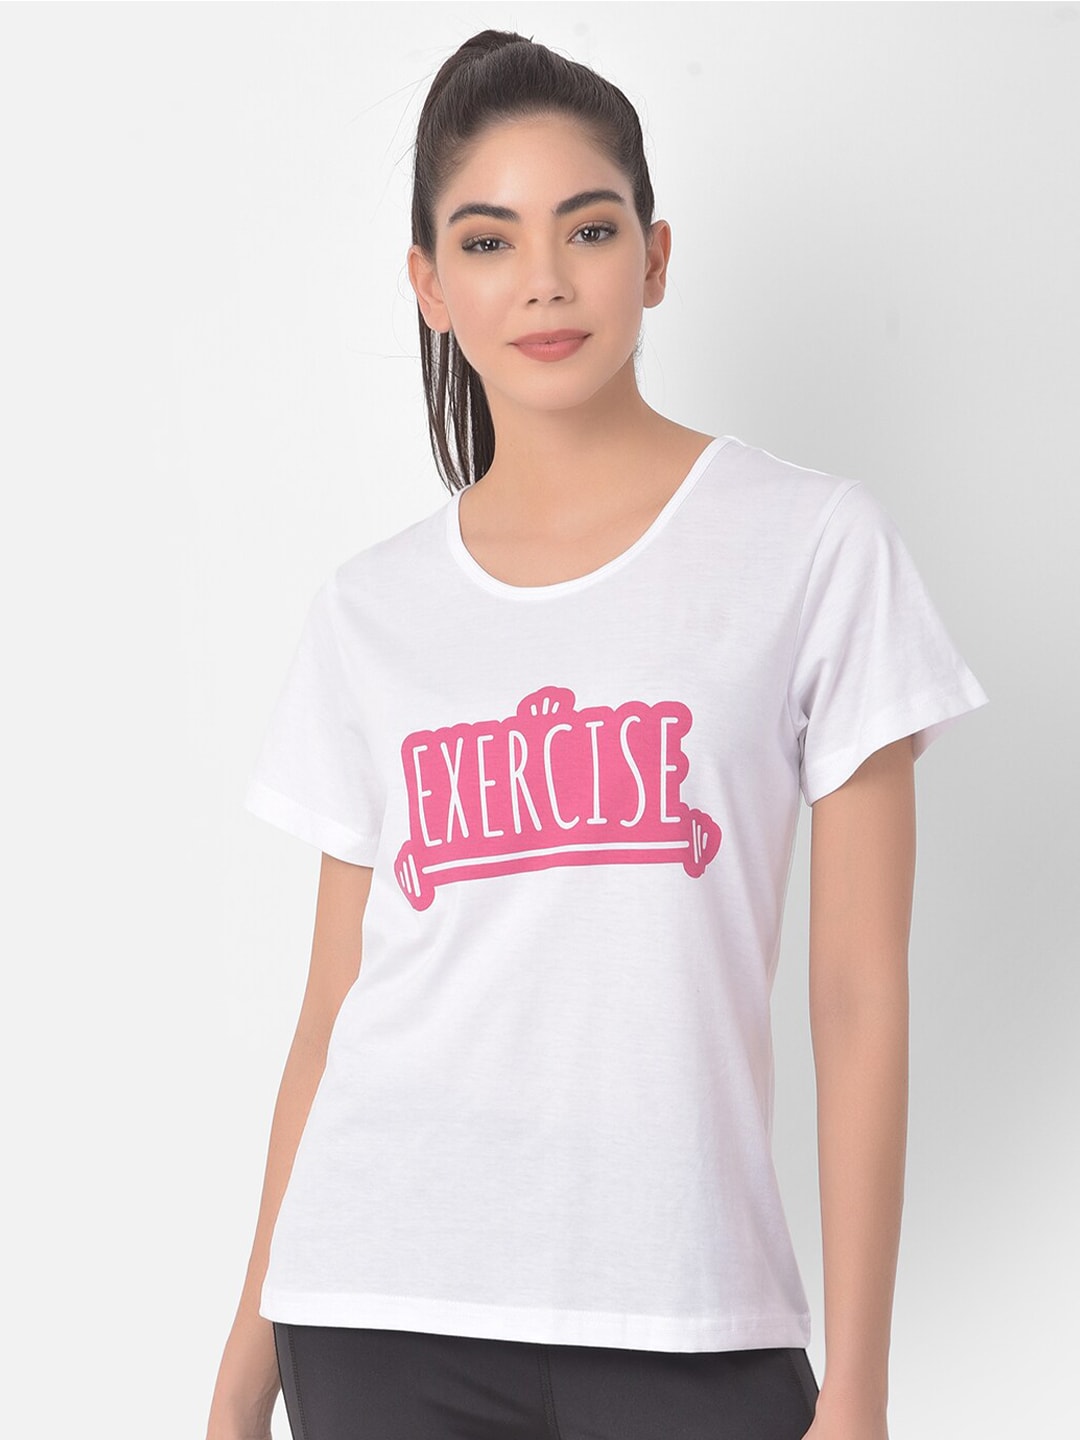 Clovia Women White & Pink Printed Training and Gym T-shirt Price in India